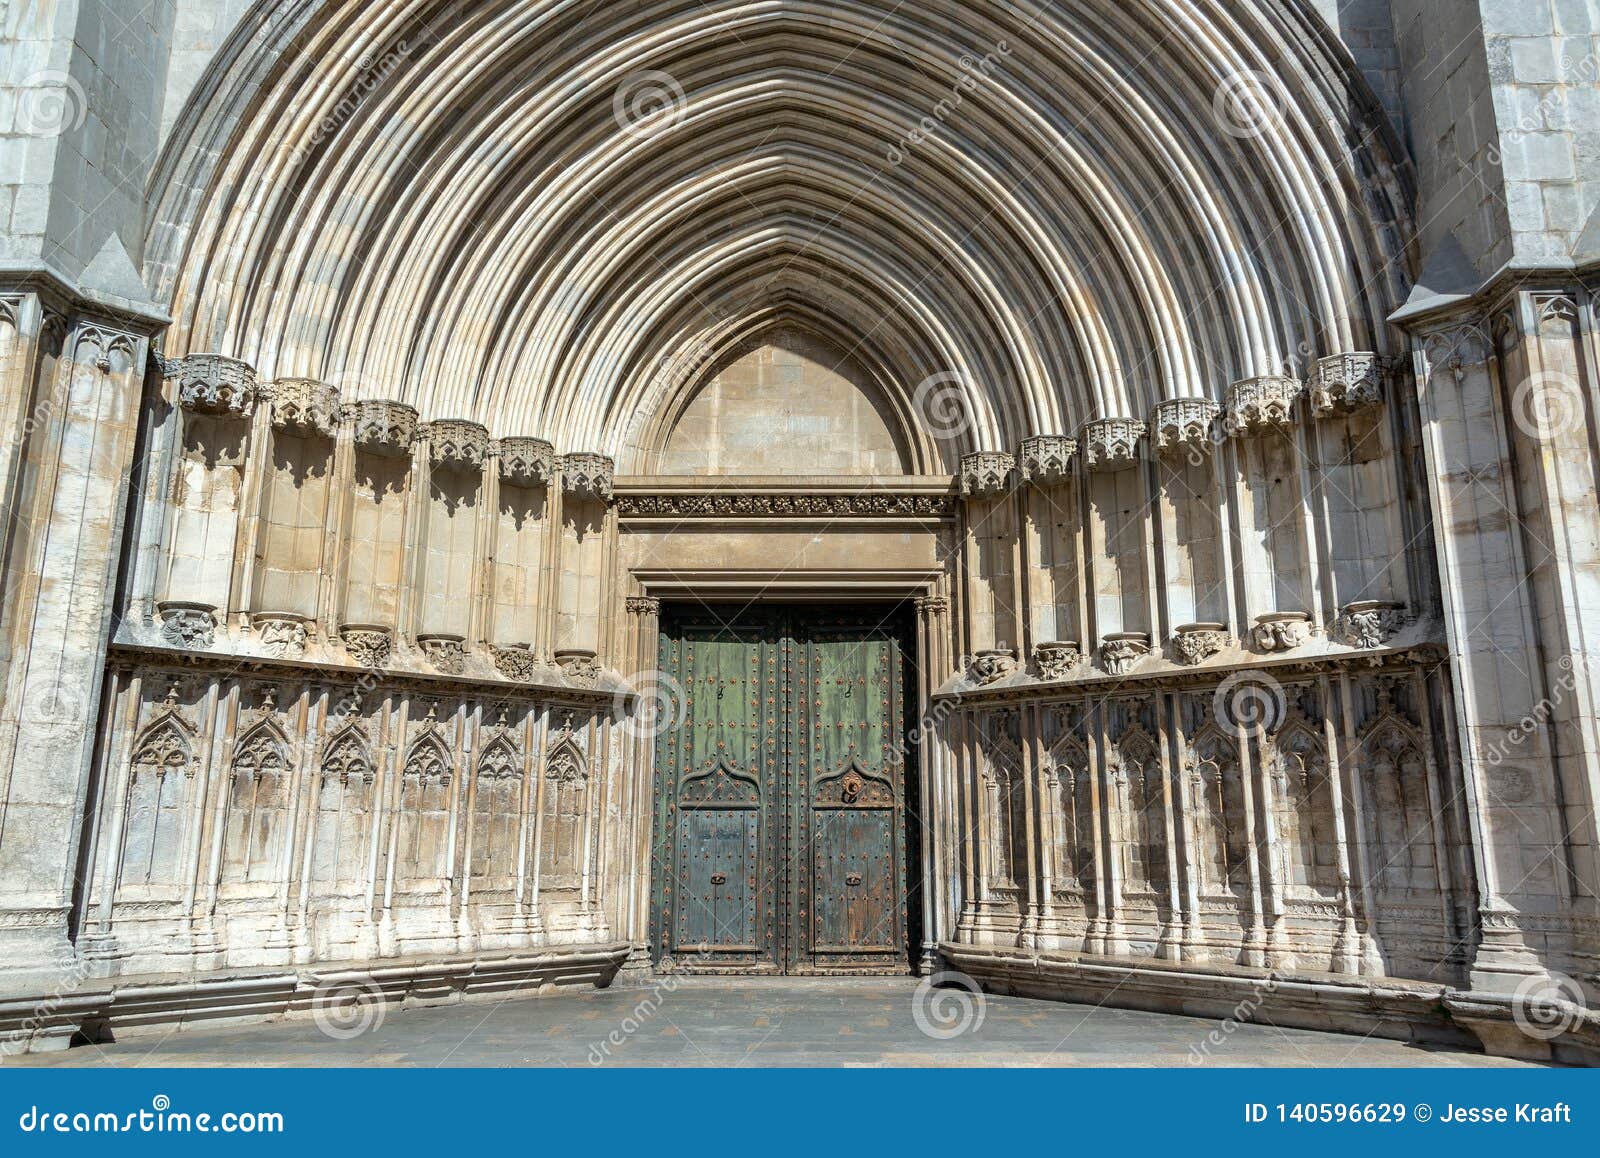 girona cathedral entrance